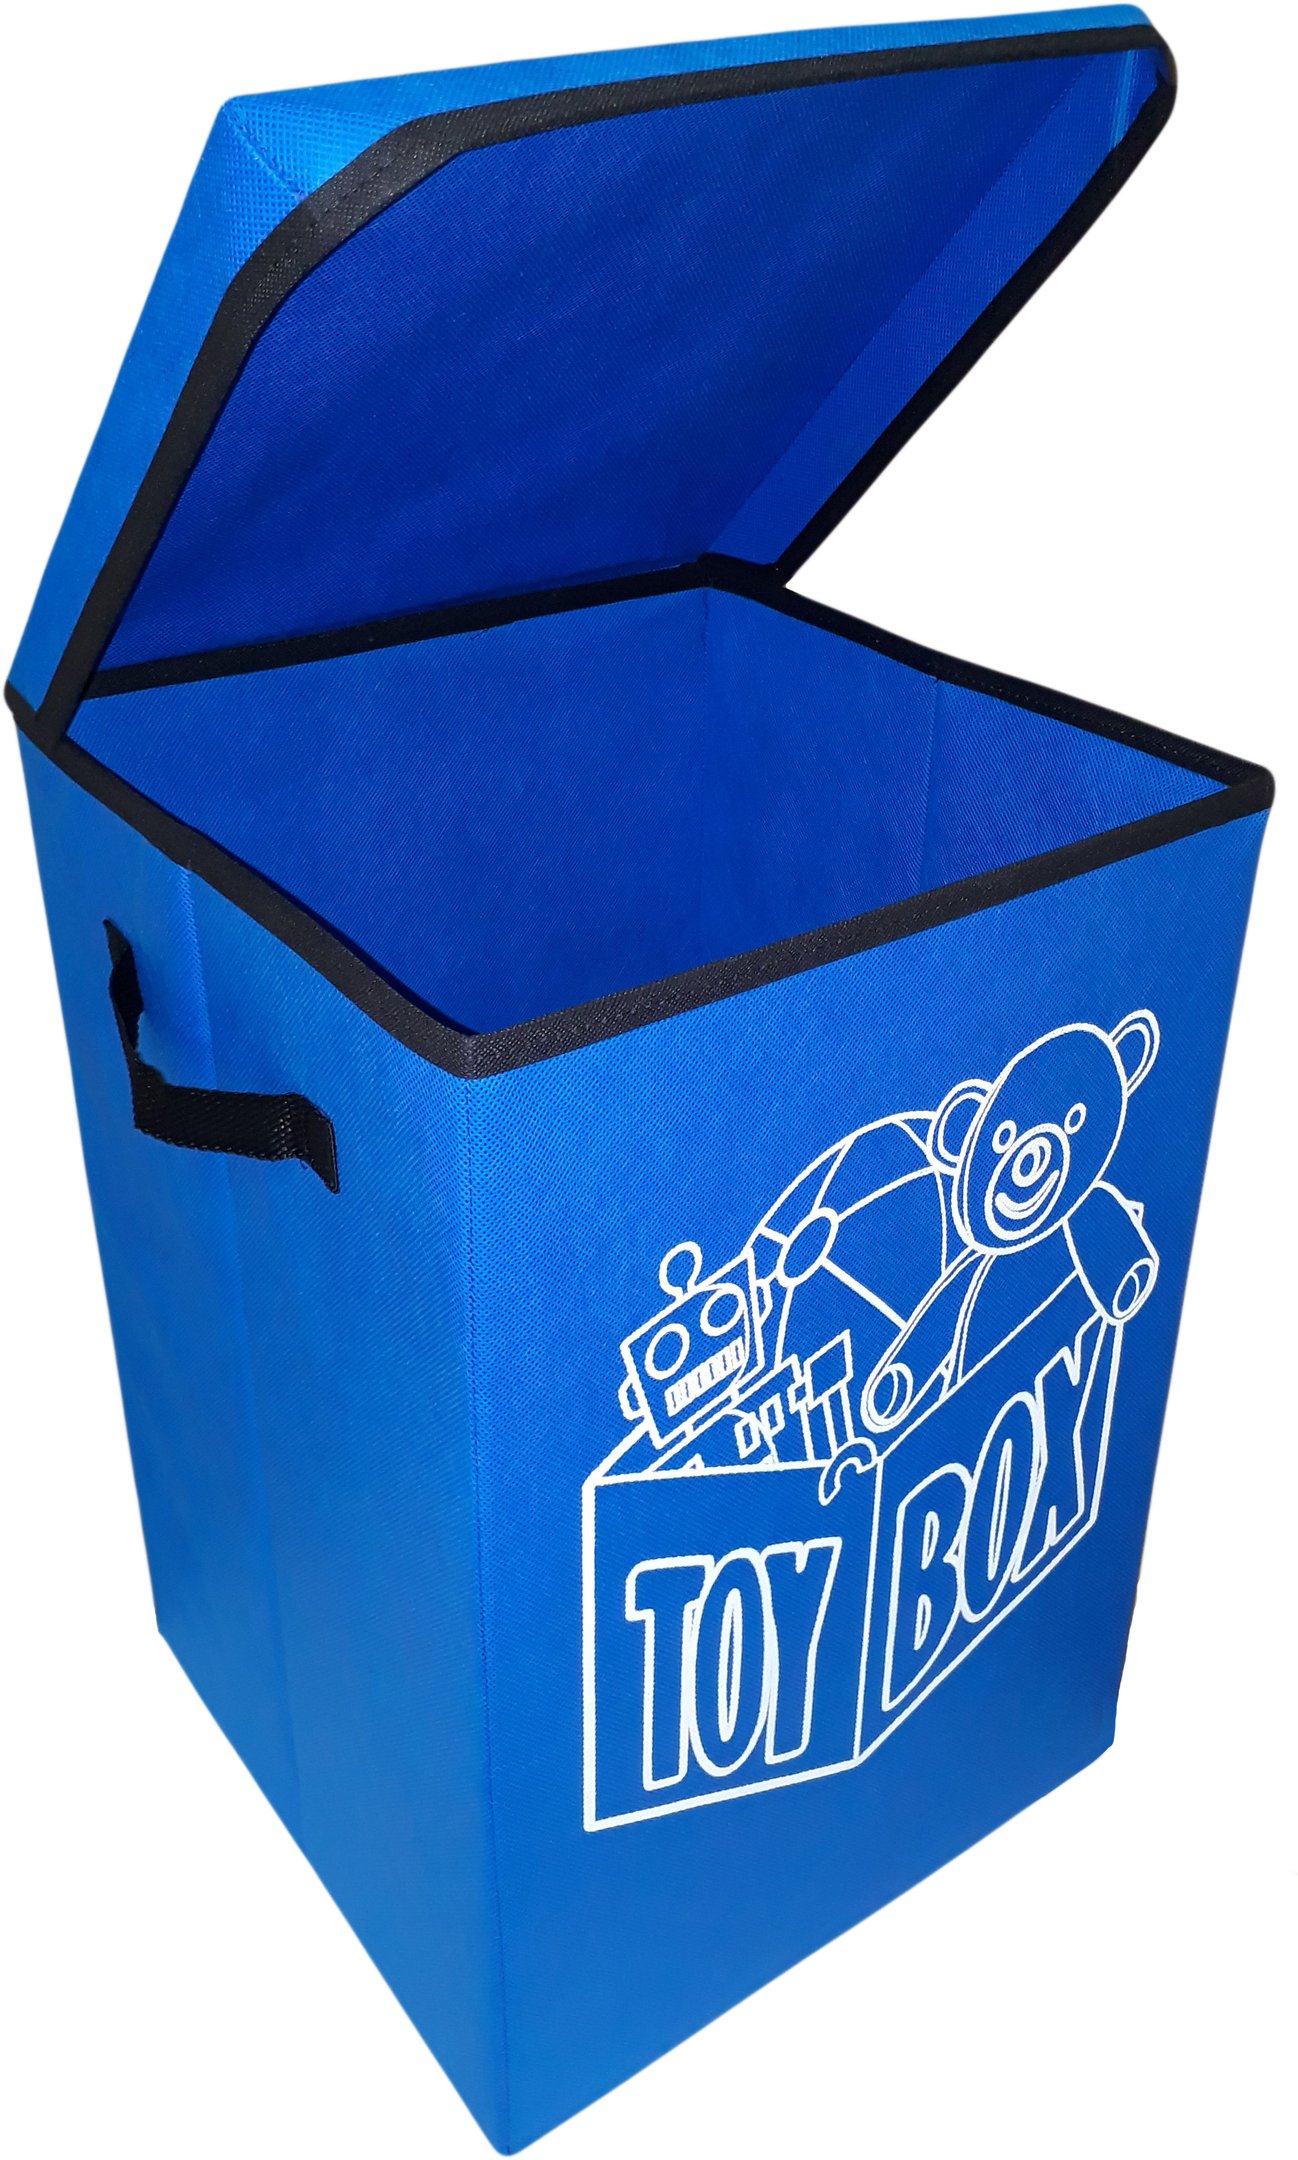 Cesto Porta Brinquedo, Caixa De Brinquedo - Azul - 3